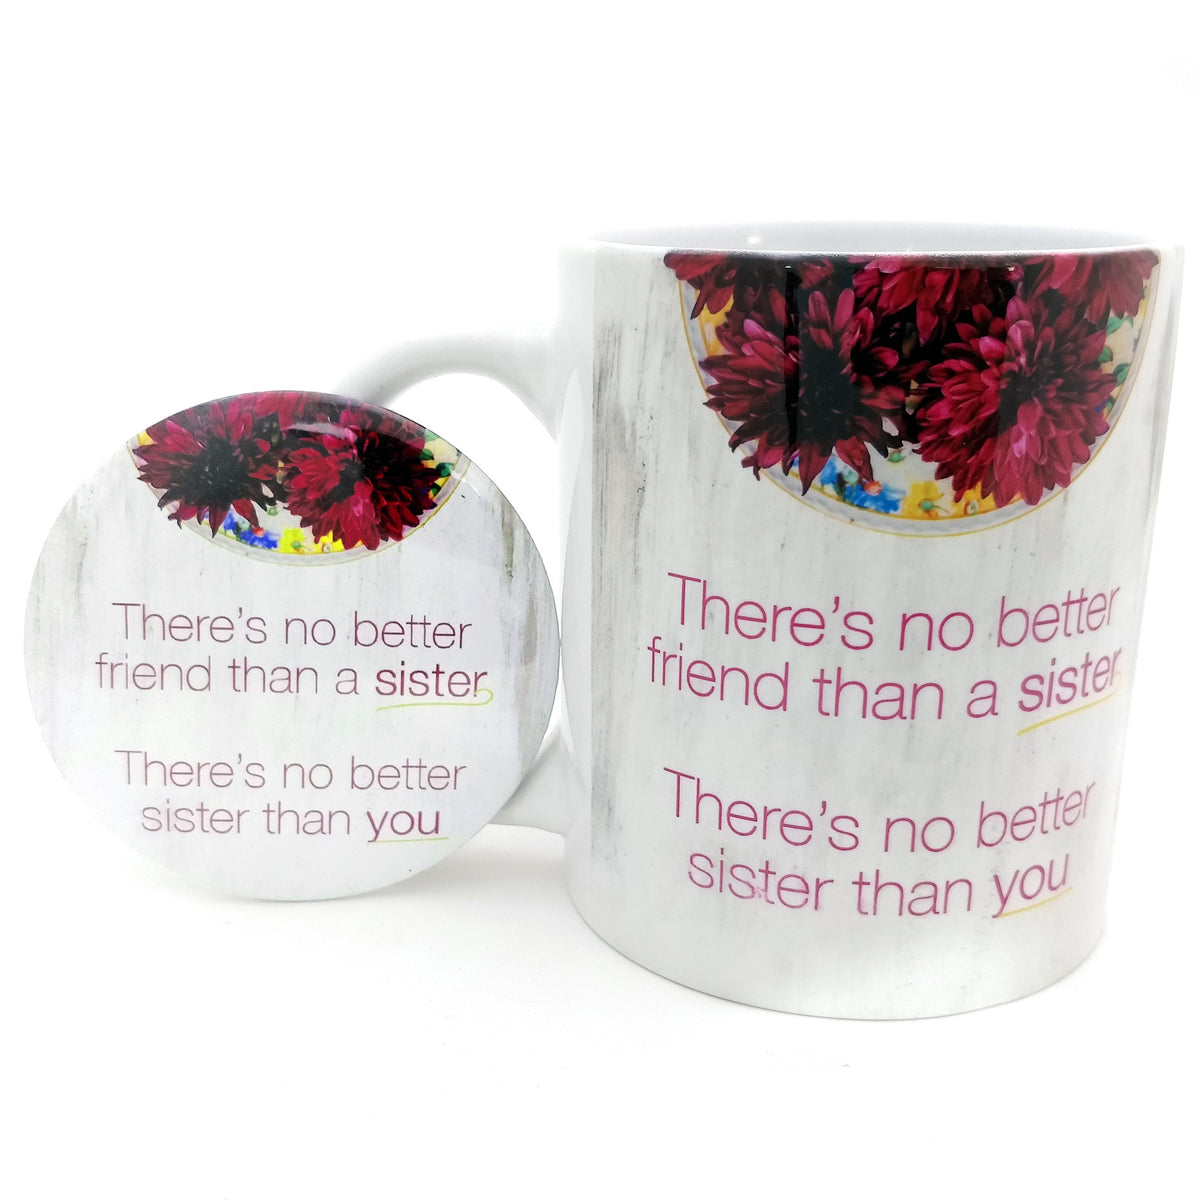 theres-no-better-friend-than-sister-ceramic-mug